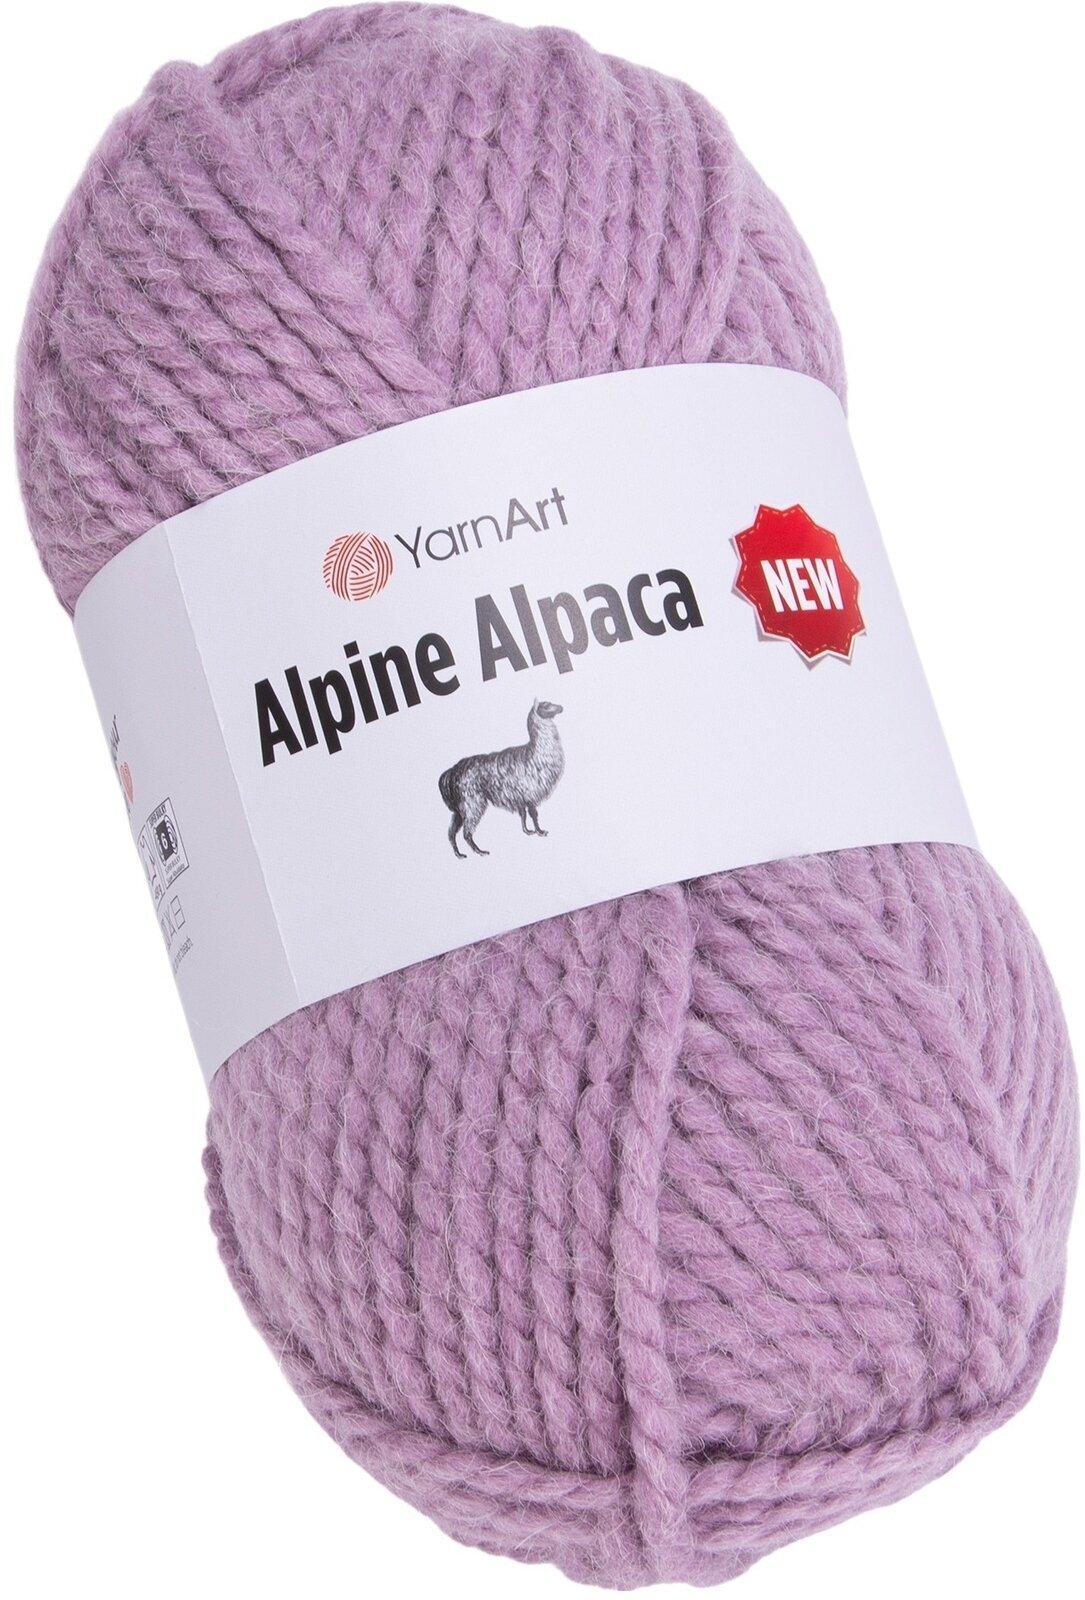 Knitting Yarn Yarn Art Alpine Alpaca 1443